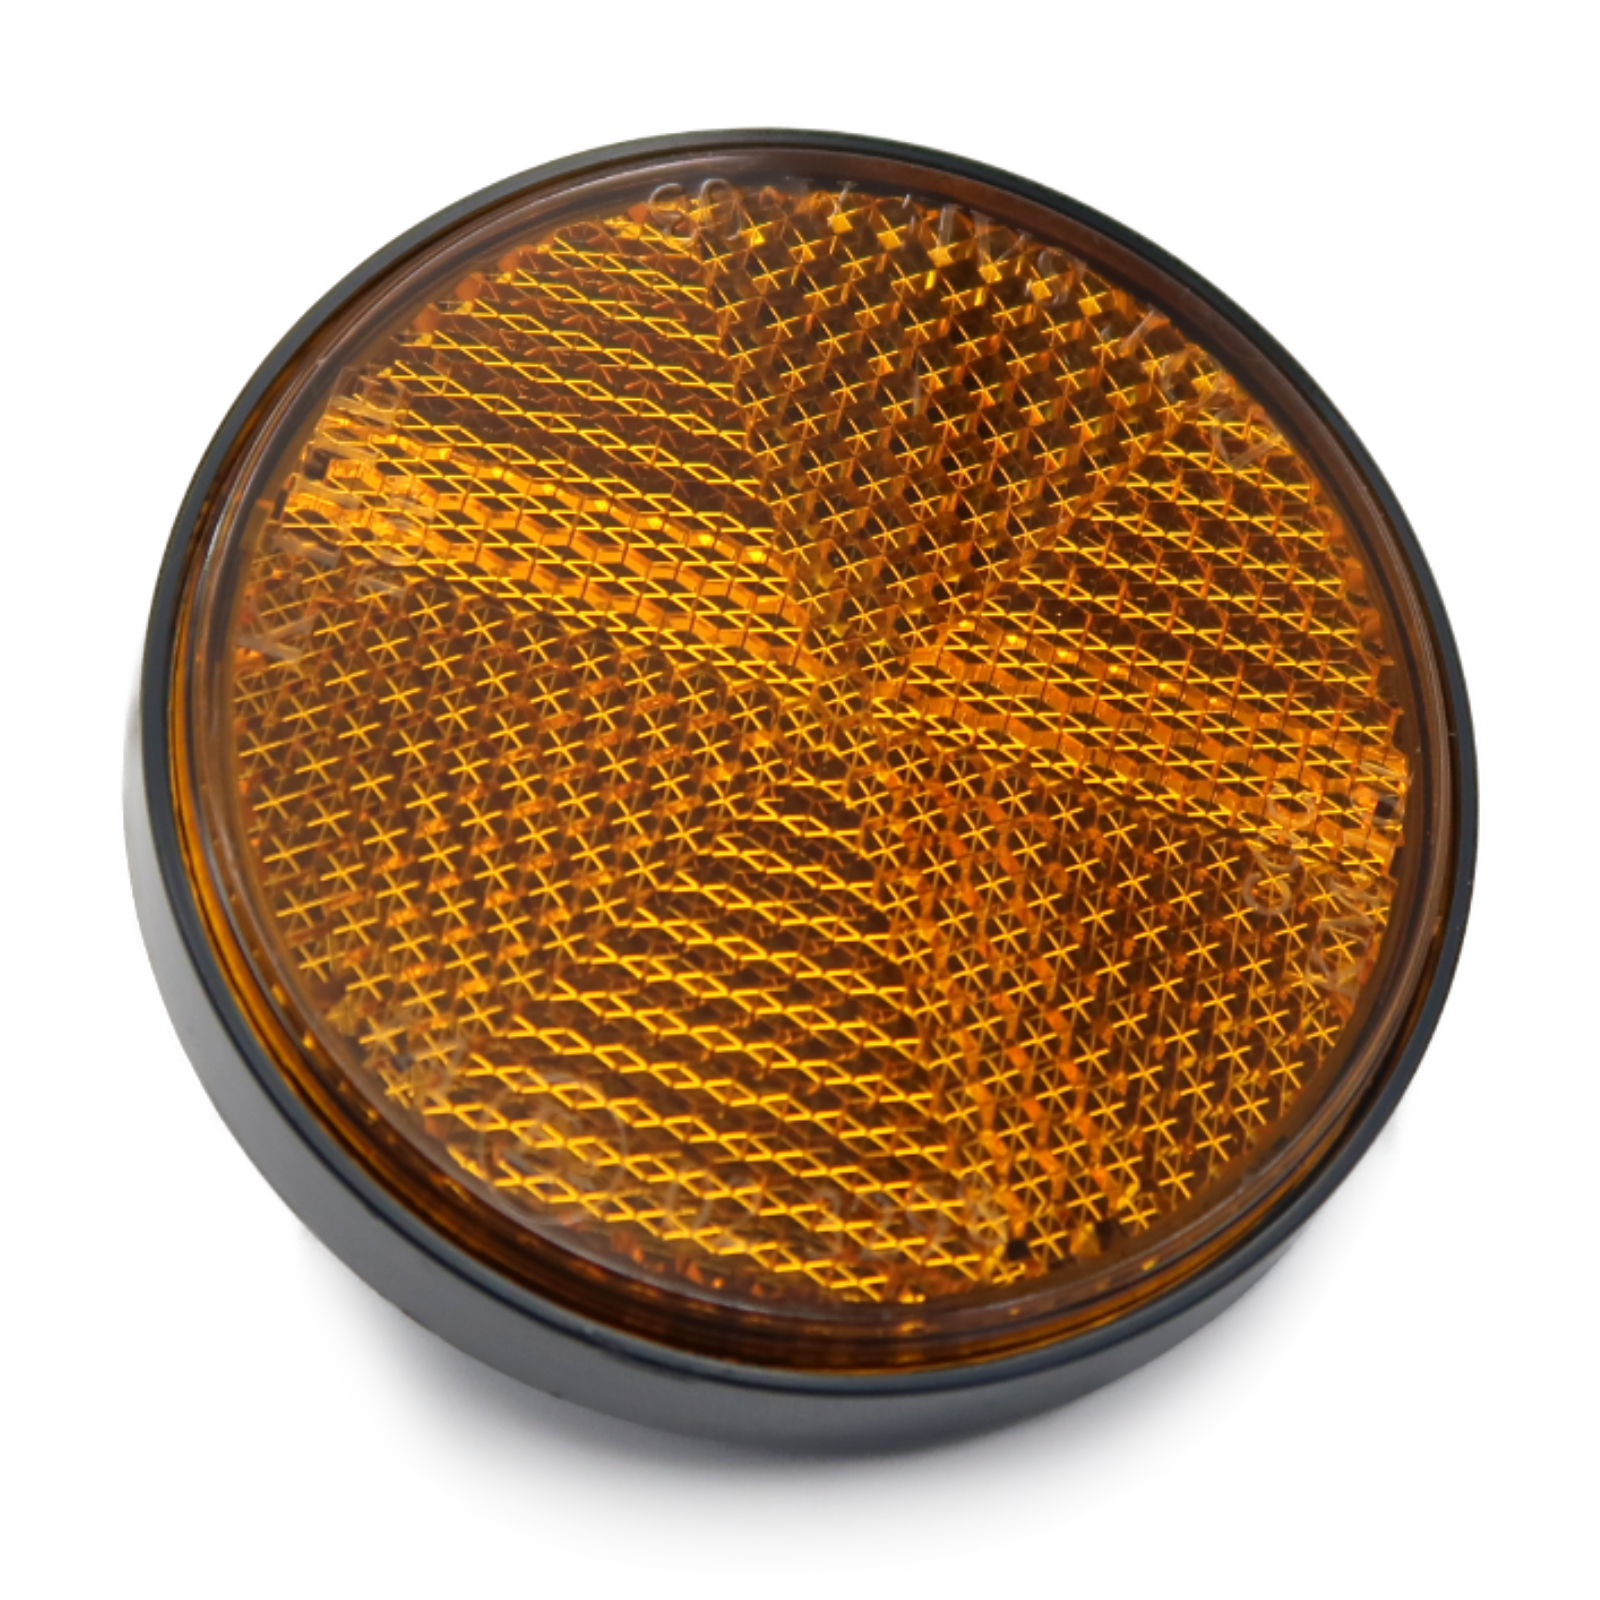 MX2/MX3 - Reflektor, rund, Orange , vorne, 1 Stück